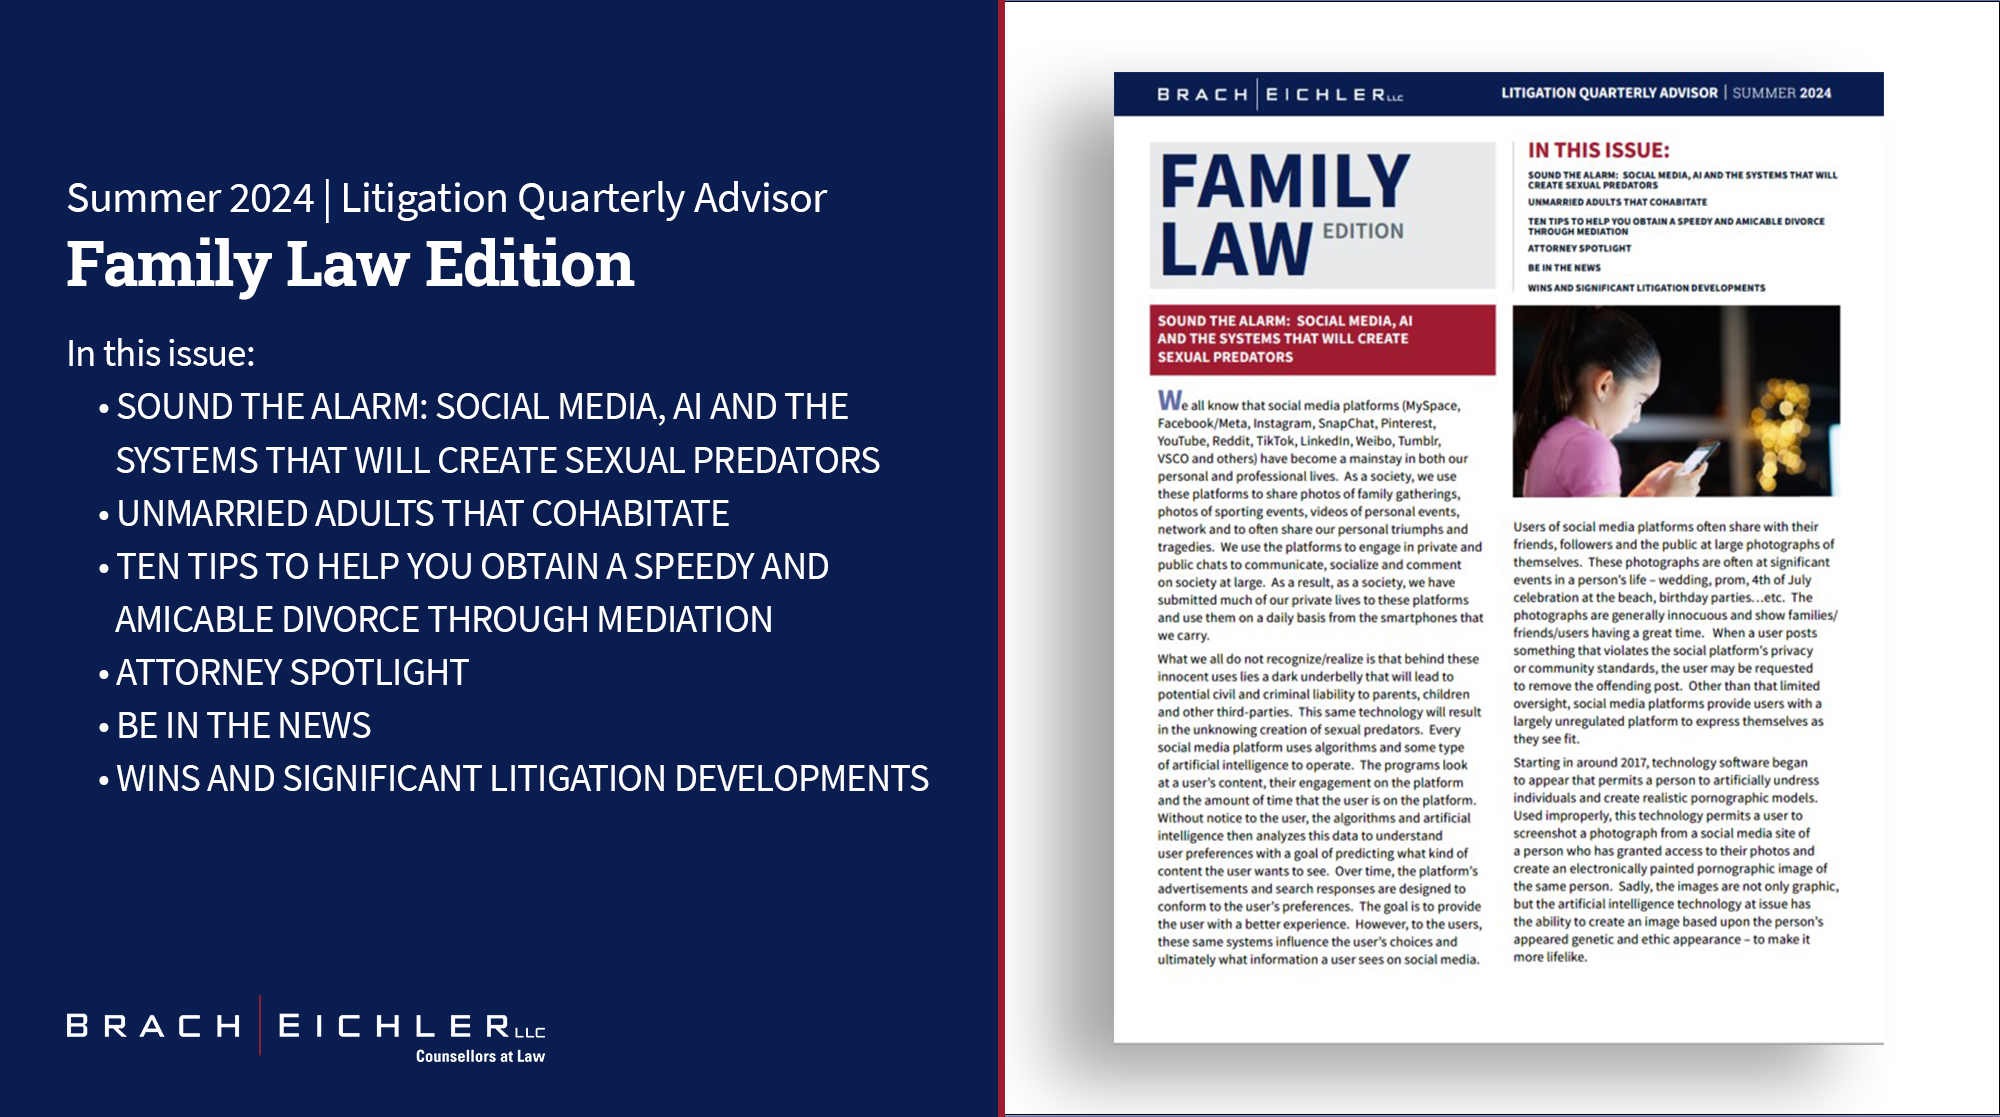 Litigation Quarterly Advisor - Family Law Edition - Summer 2024 - Brach Eichler